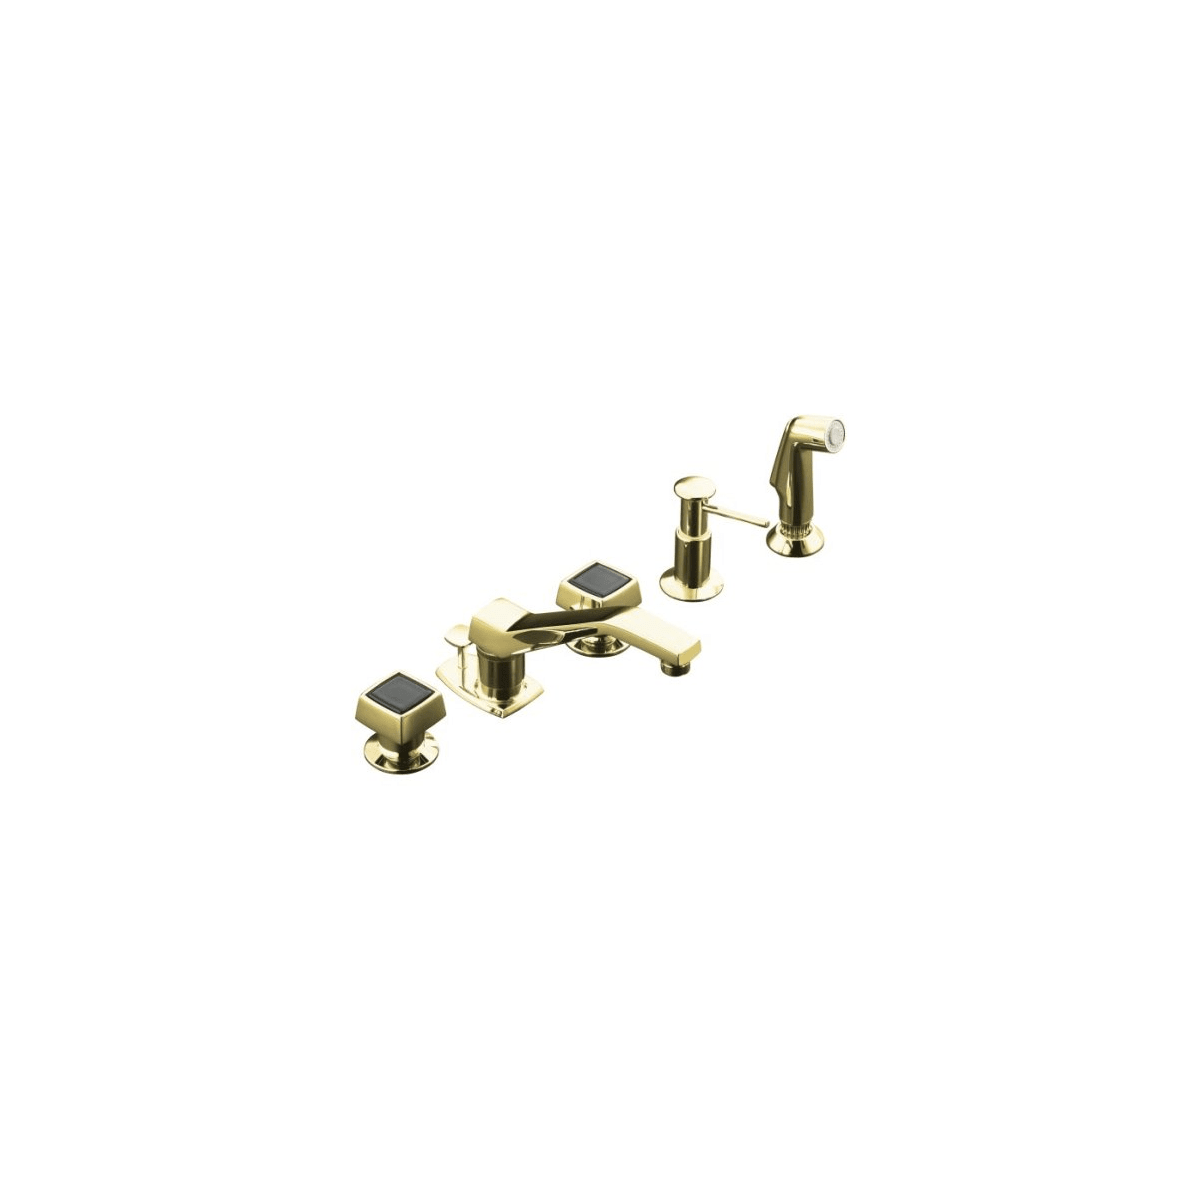 Kohler K 6962 2 Pb Polished Brass Double Handle Widespread